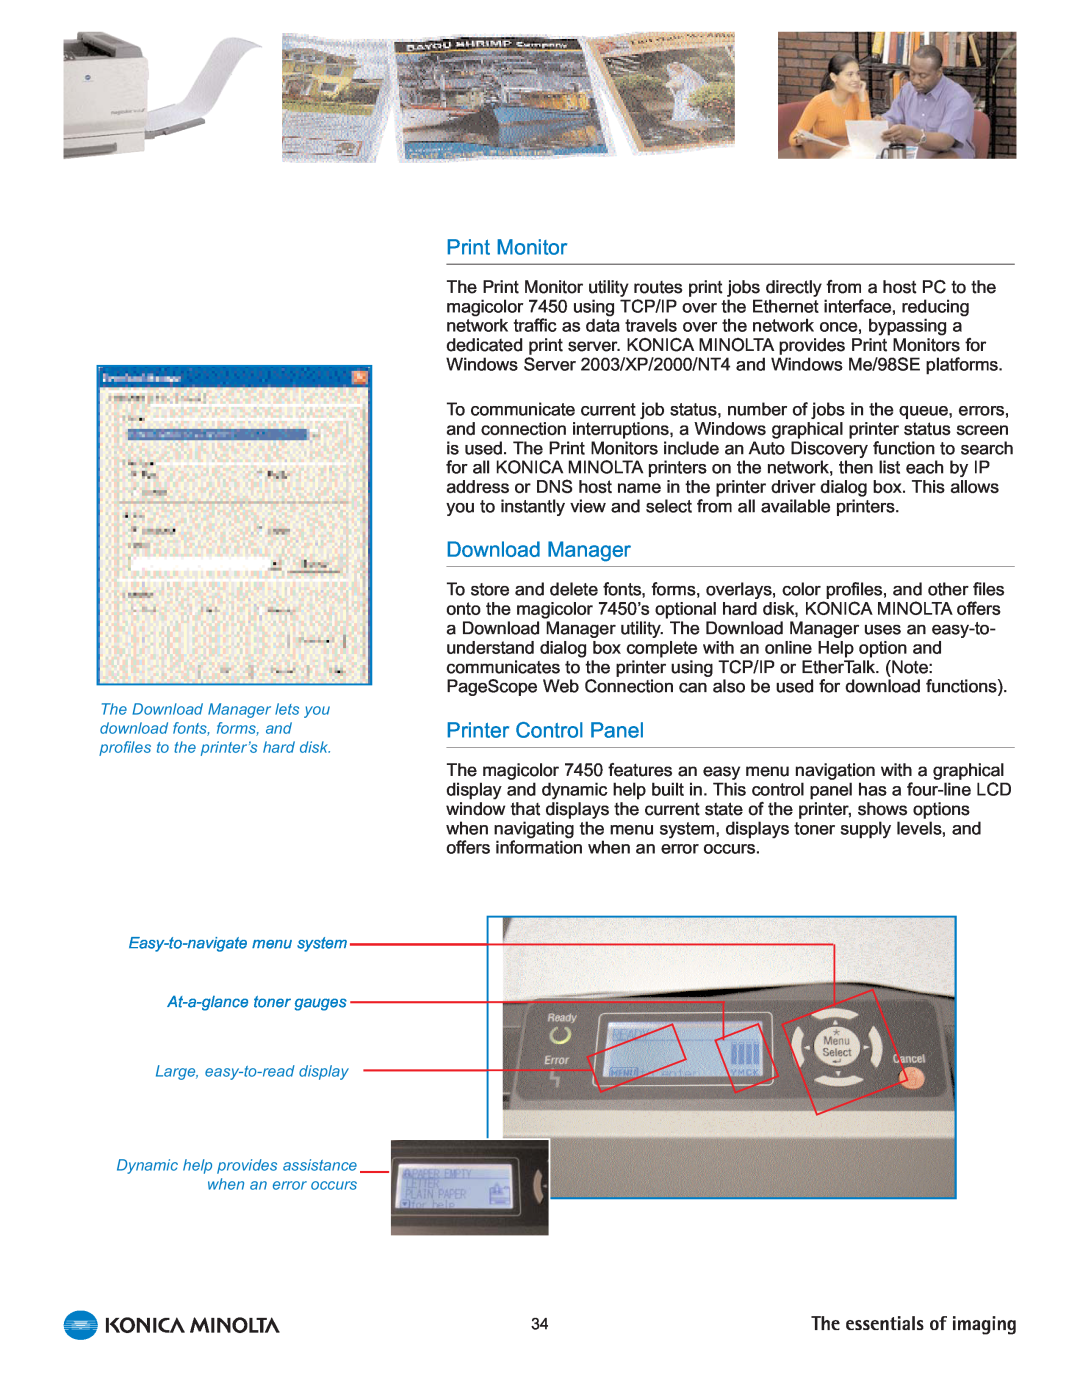 Konica Minolta 7450 manual Print Monitor, Download Manager, Printer Control Panel, Easy-to-navigatemenu system 